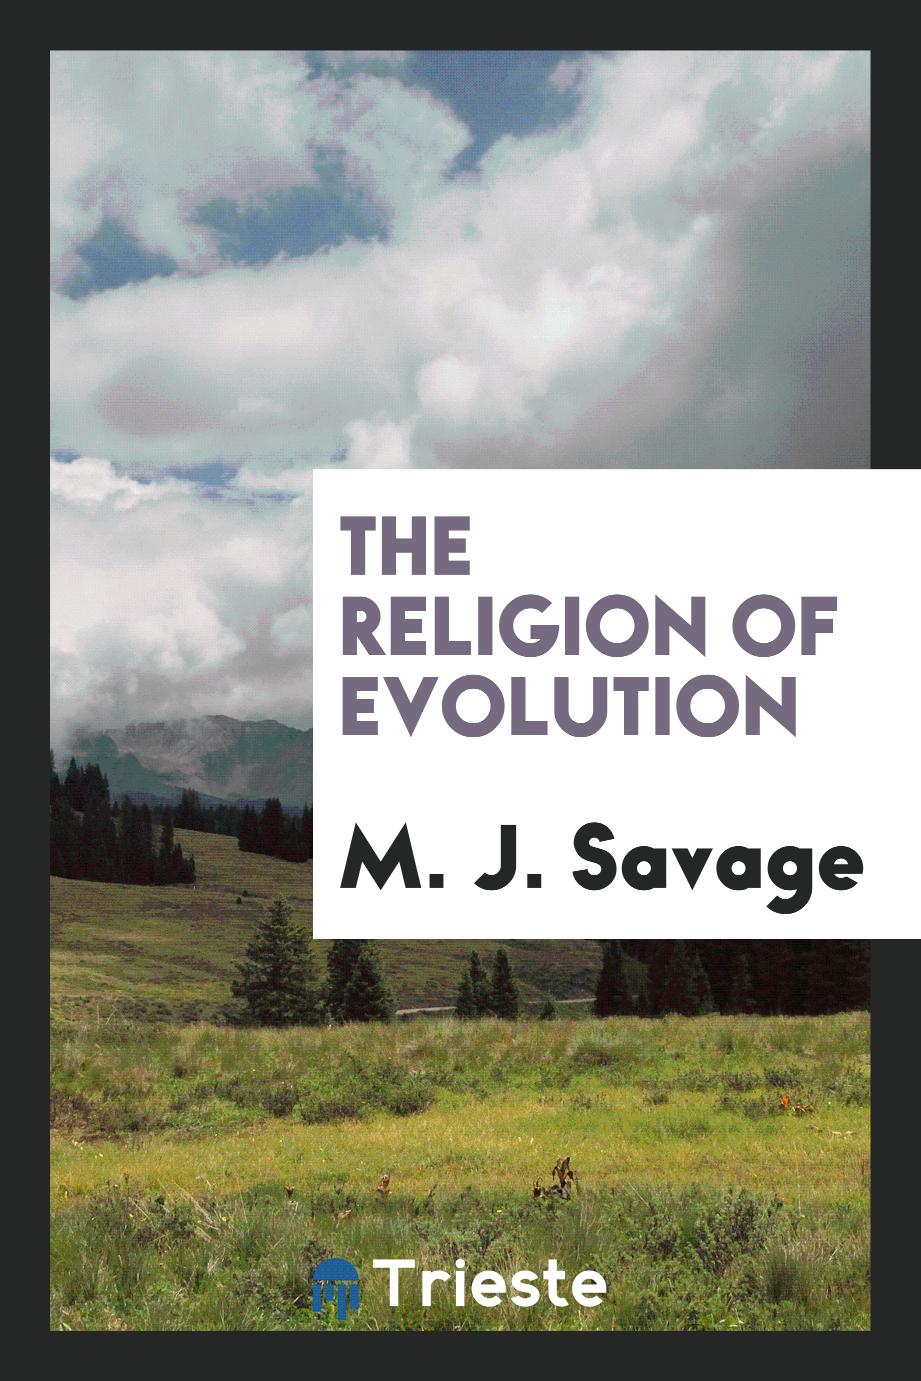 The religion of evolution